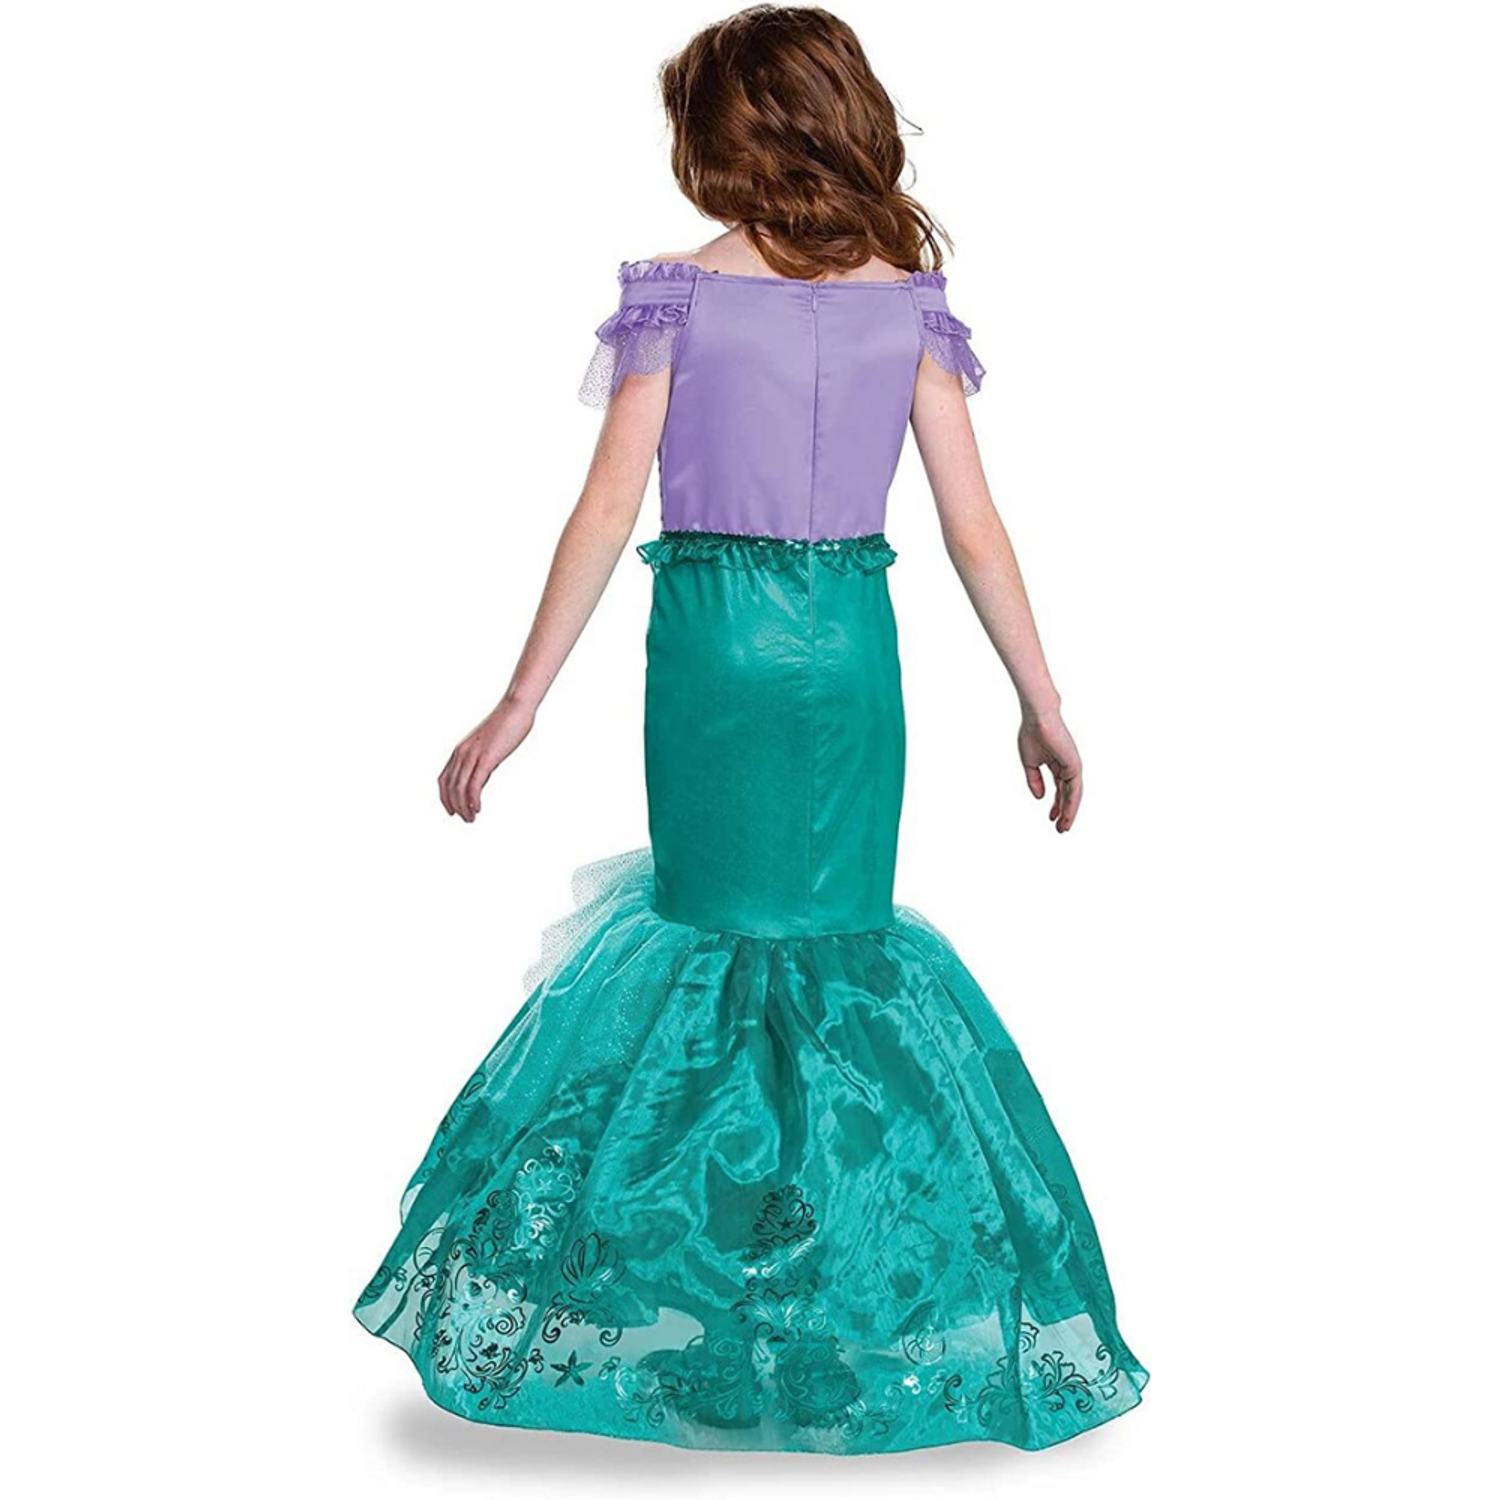 Disguise Girl's Prestige Disney Princess Dress Pretend Play Costume Dress-Up (Ariel, XS (3T-4T)) - image 3 of 4